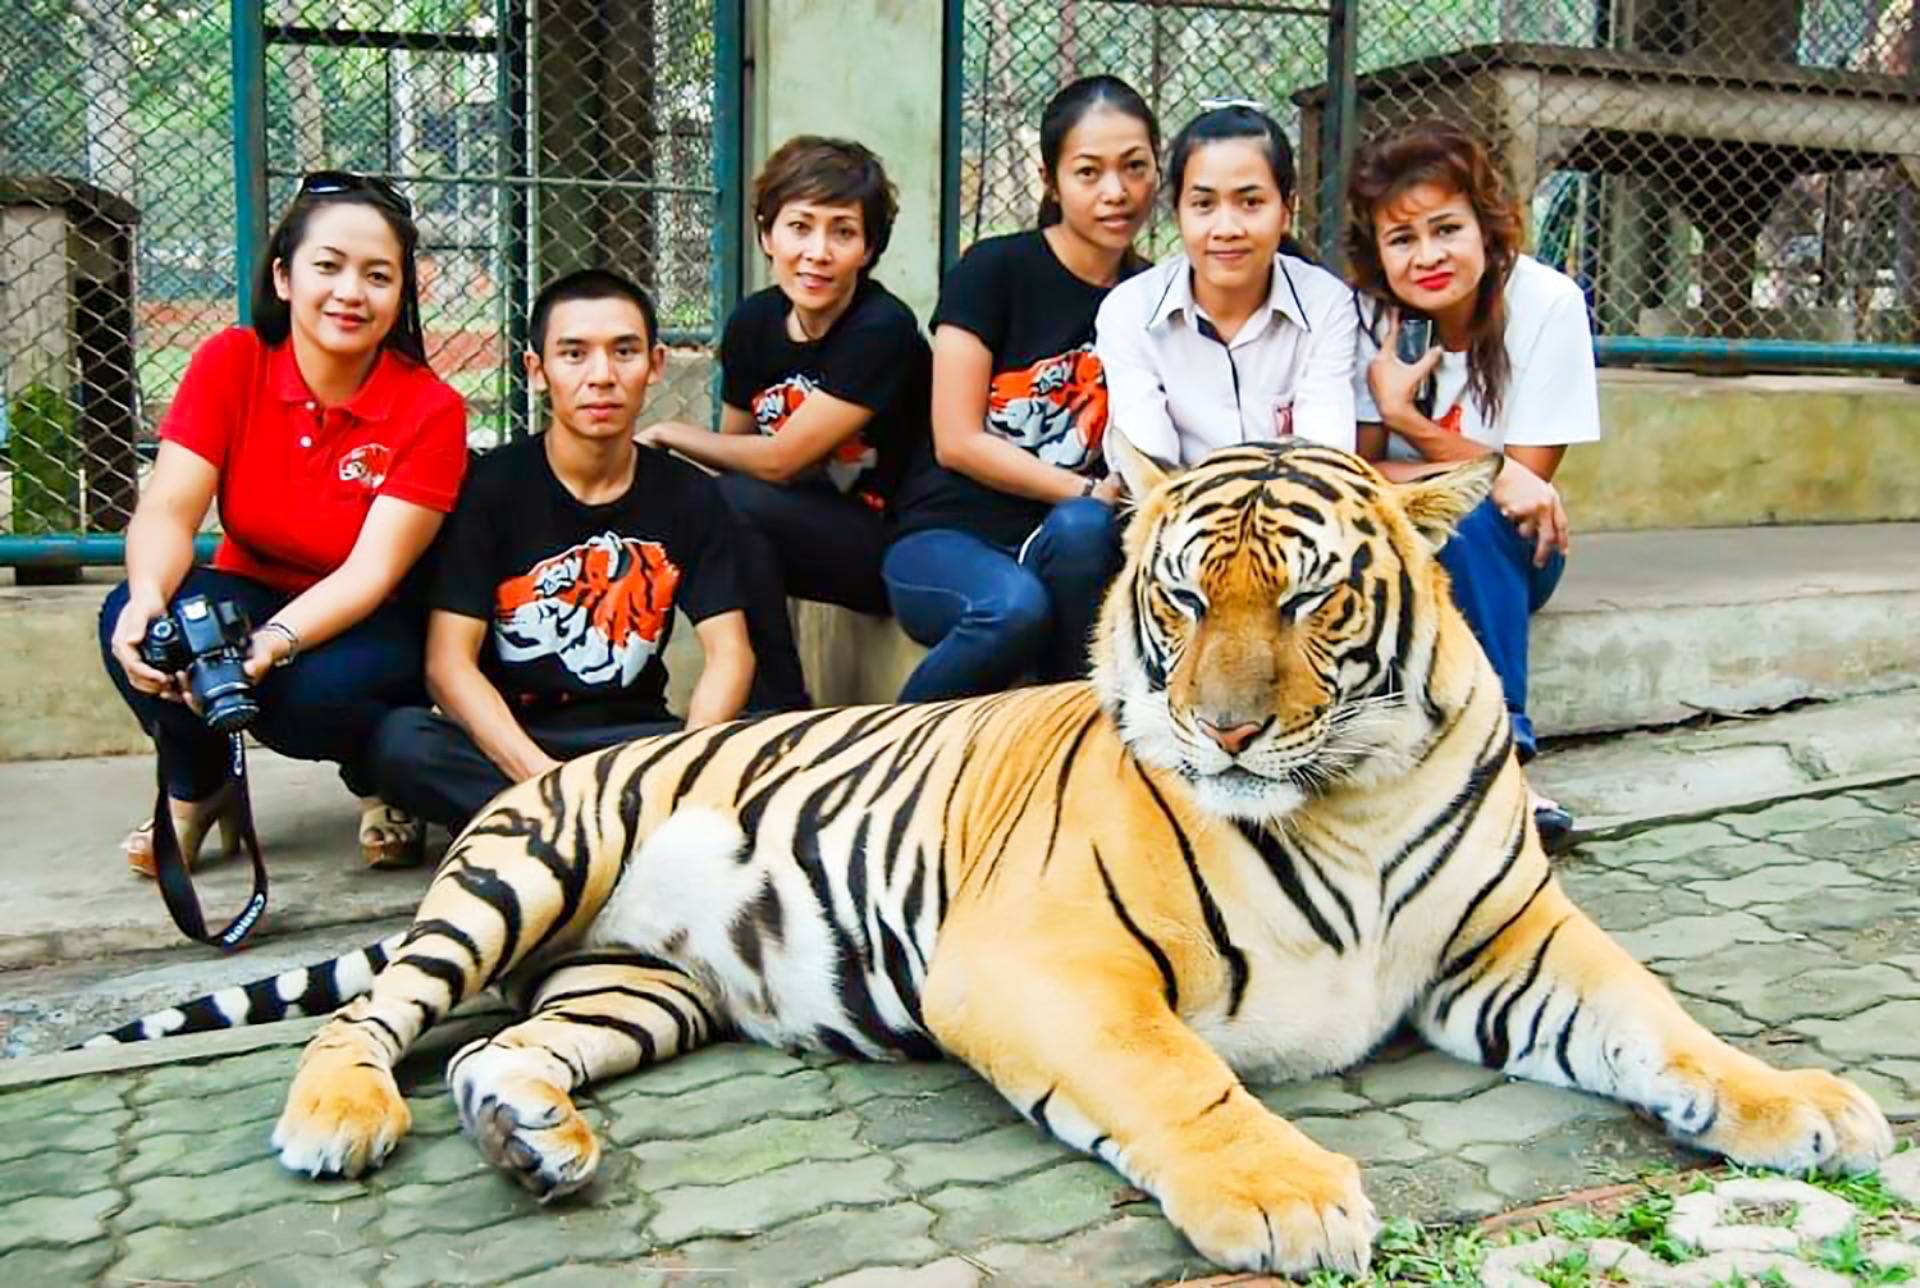 Tiger Kingdom-Chiang Mai Thailand - petting tigers?